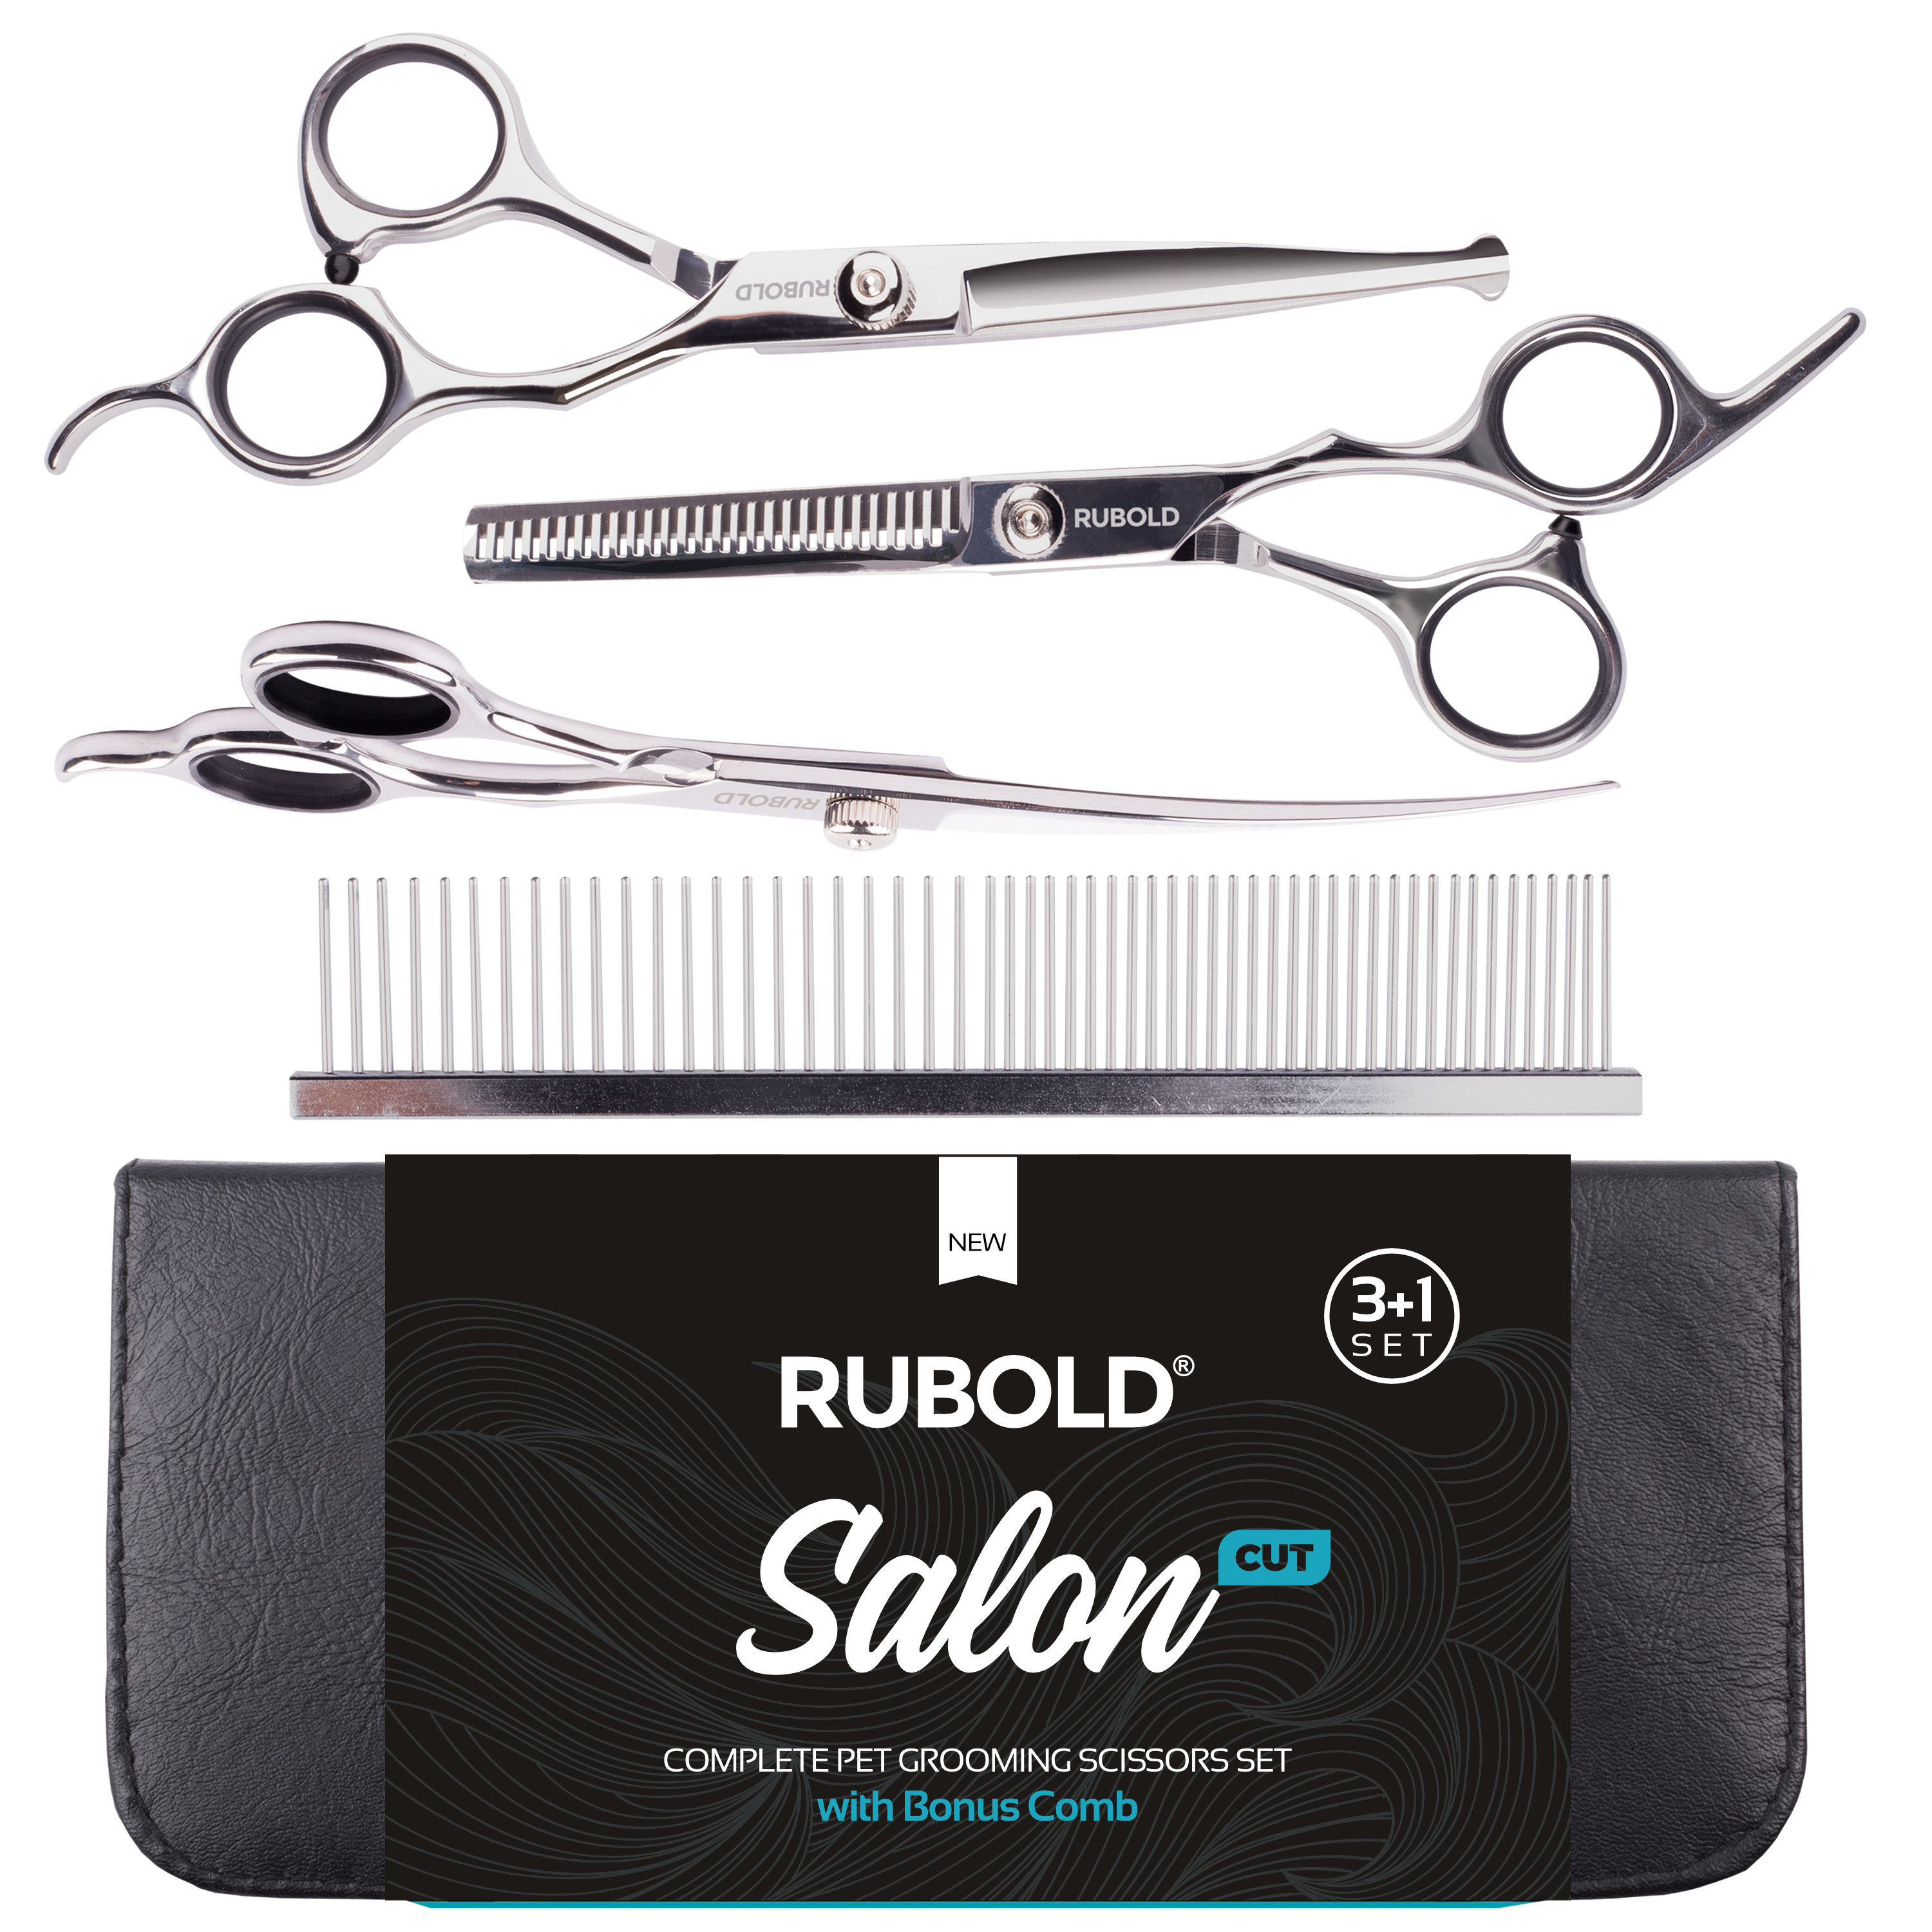 Salon Cut 3+1 Grooming Scissors Set - RUBOLD Dog Products for Pet Parents